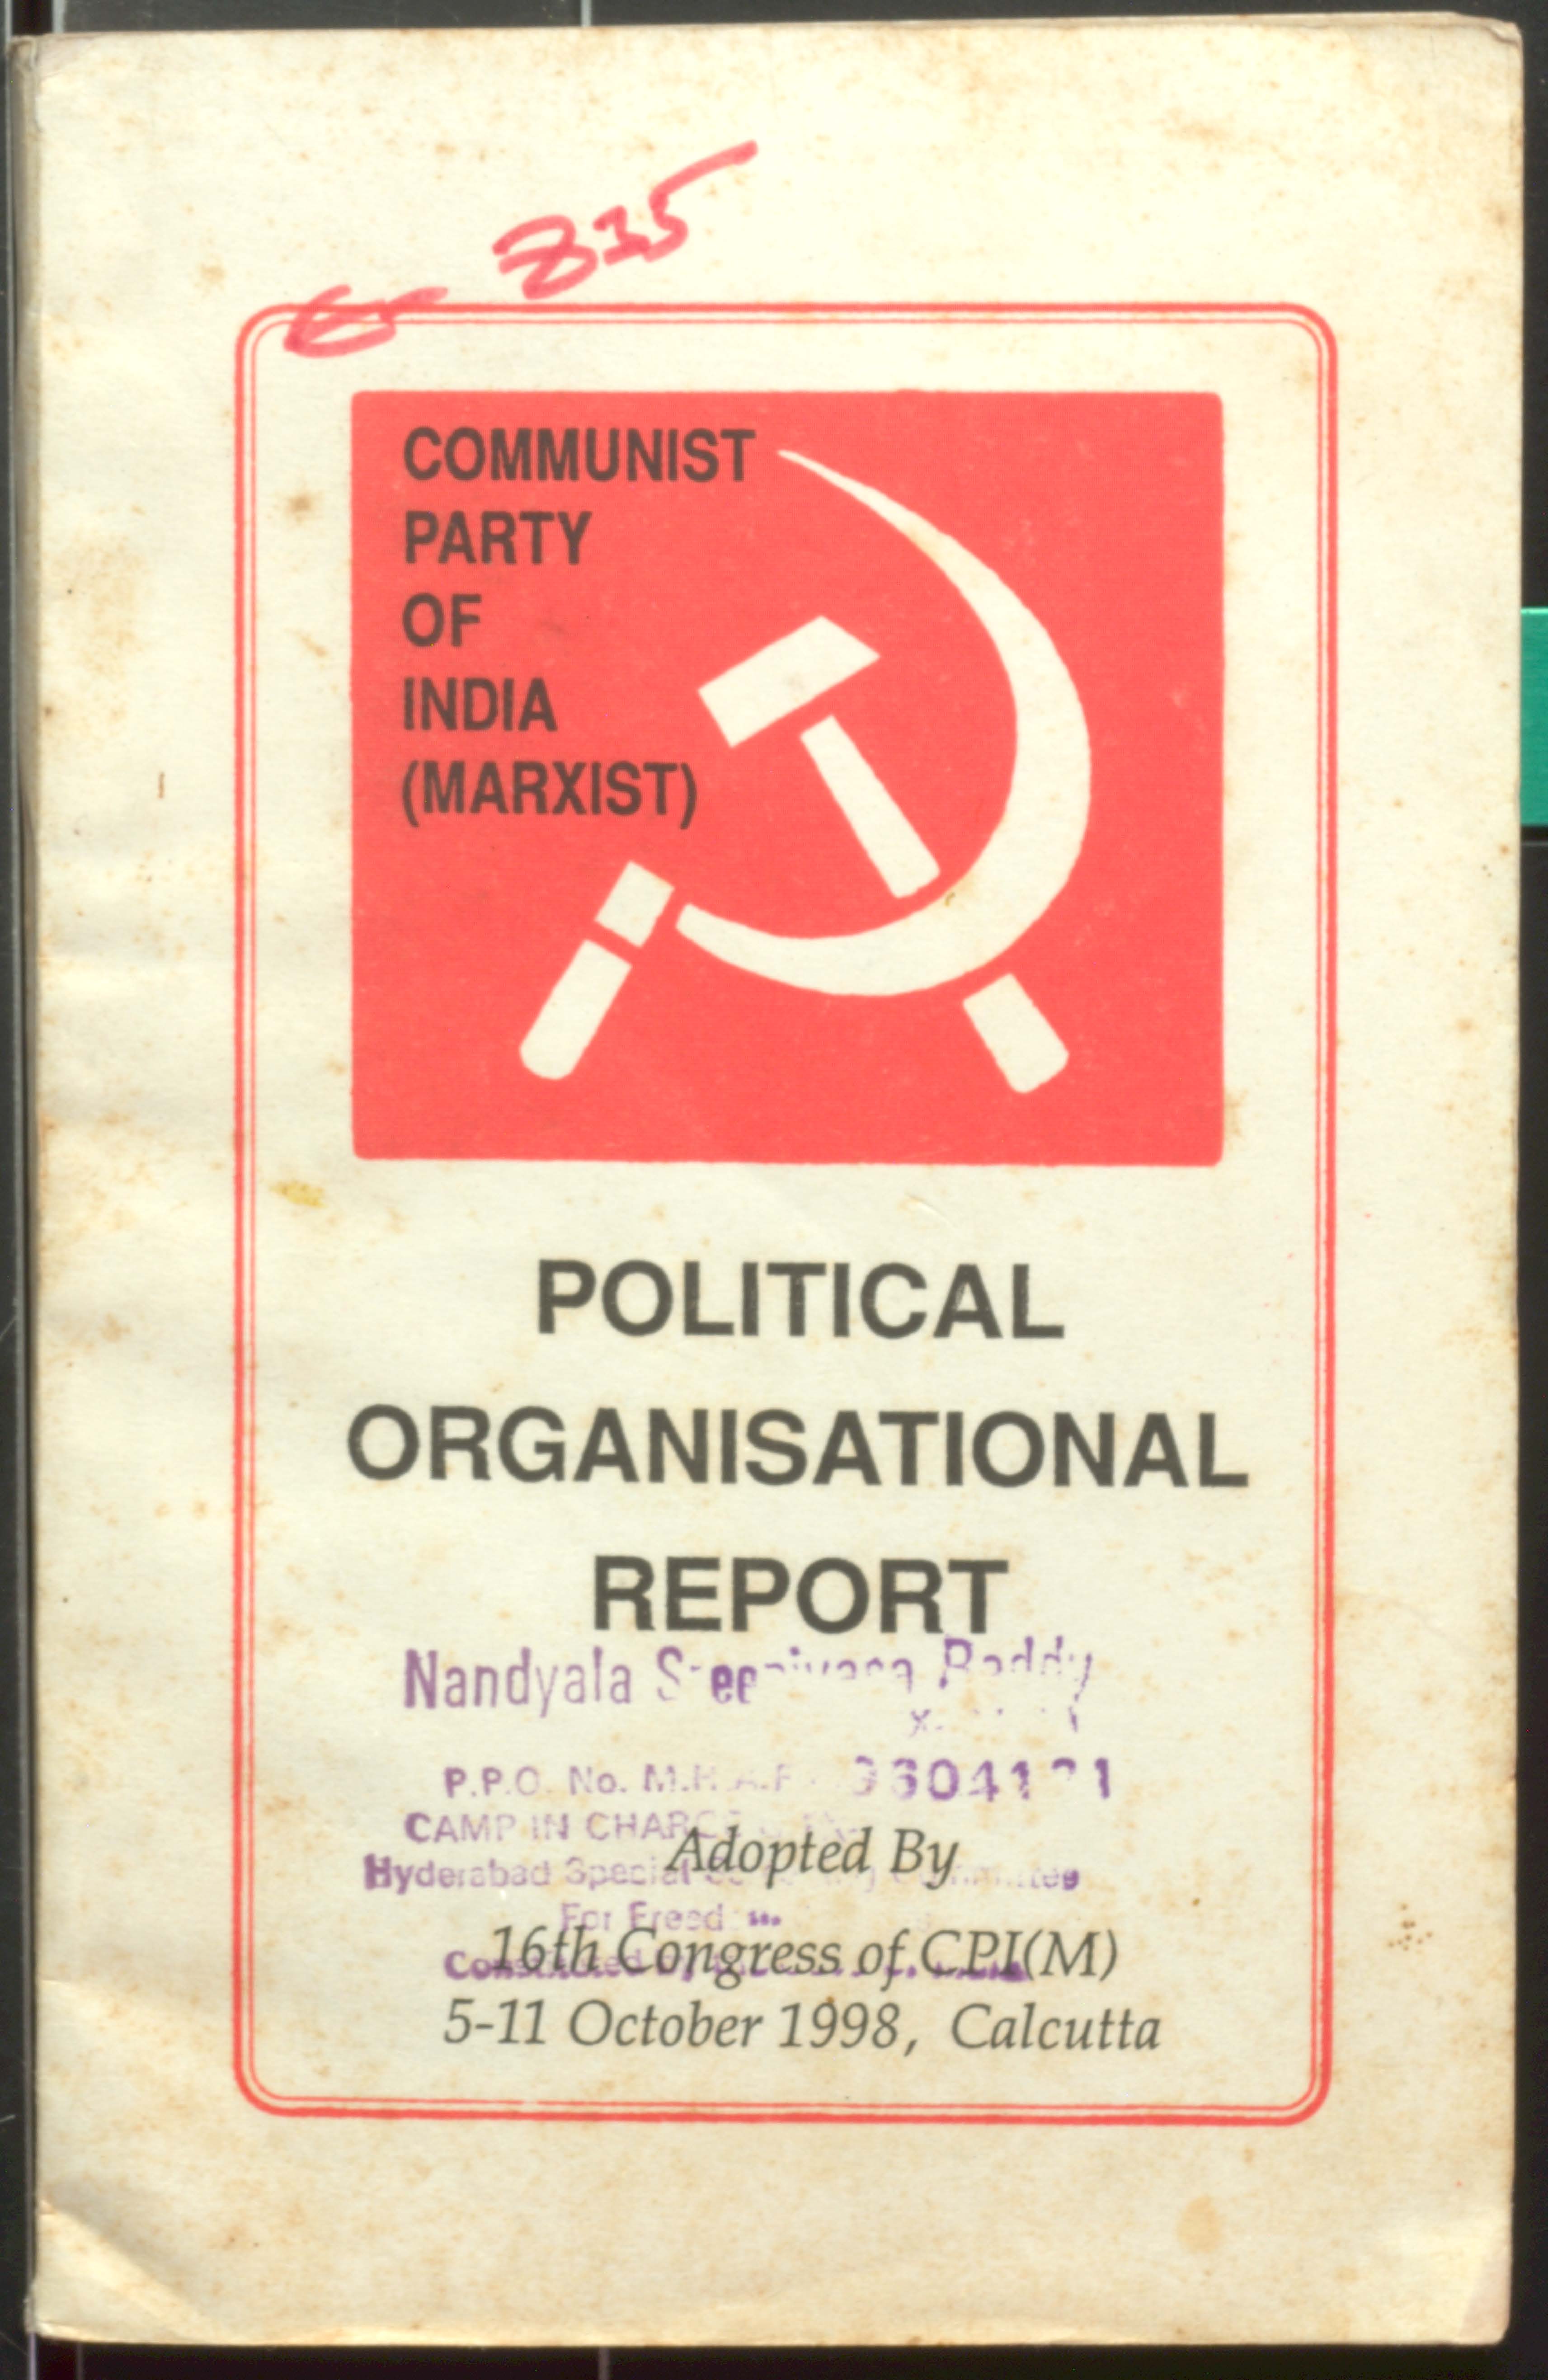 CPI(M) political orgnisational report 16th congress of  vpi(m) 5-11 october 1998, calcutta